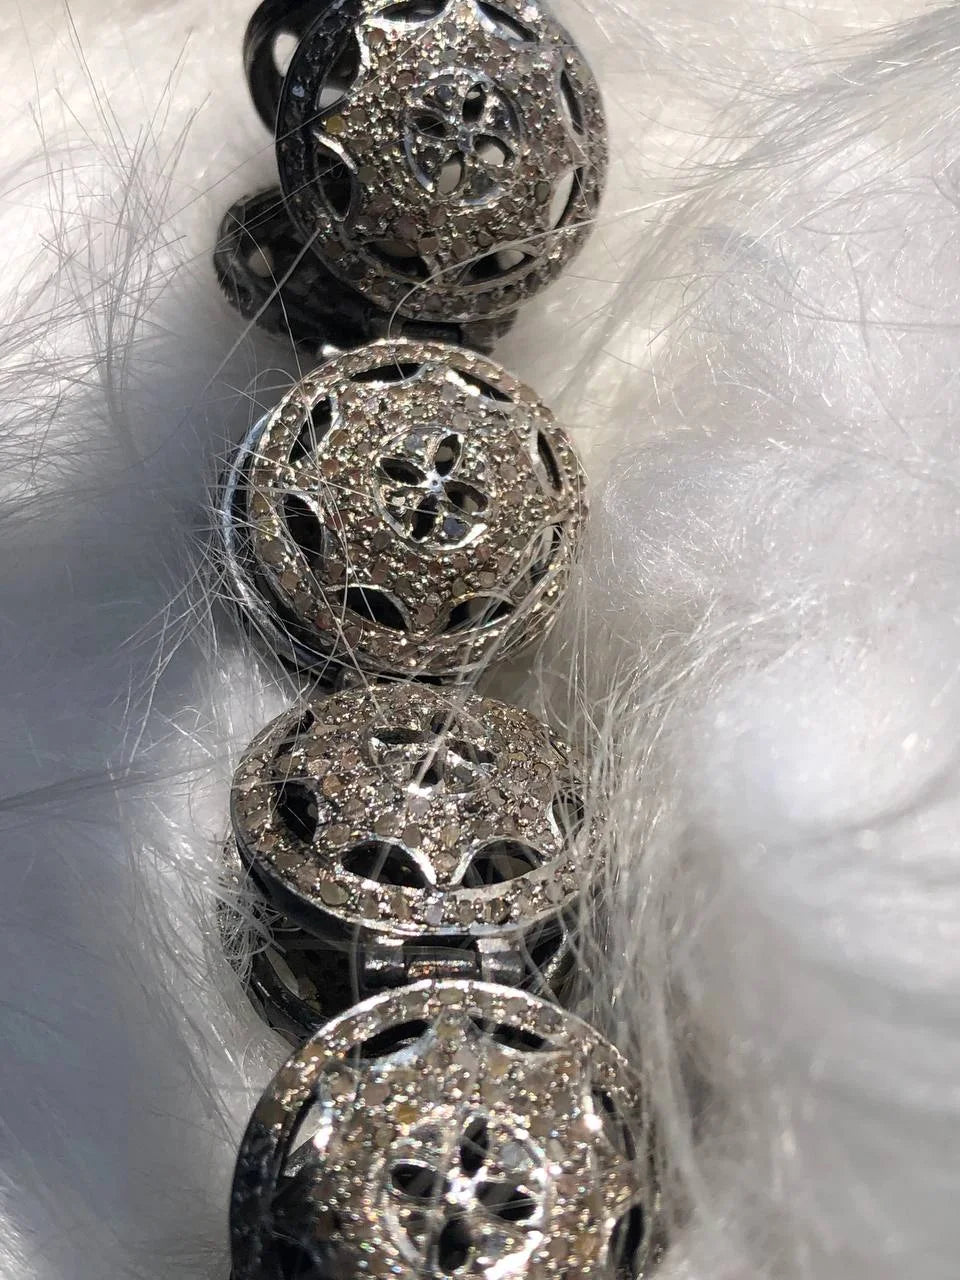 Art Deco Sterling Silver Diamond Bracelet: Stunning Birthday Surprise Gift